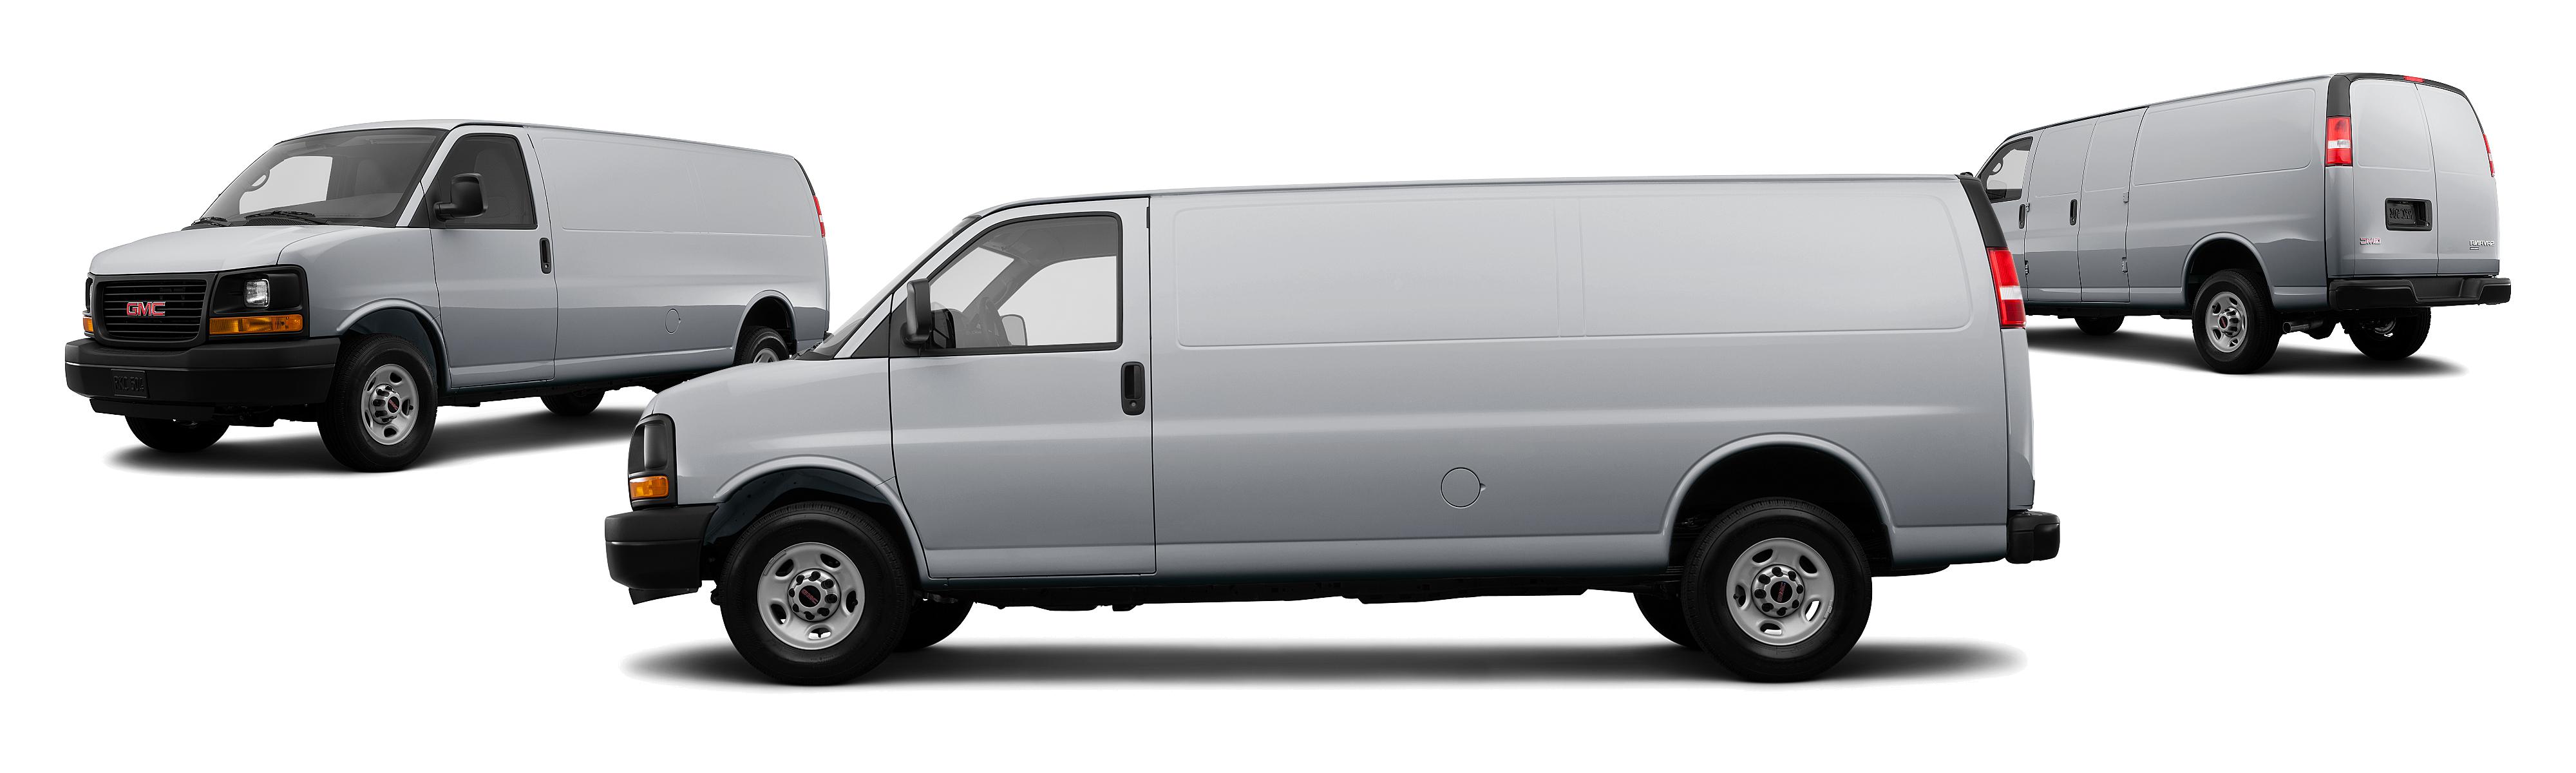 2014 GMC Savana Cargo 3500 3dr Extended Cargo Van w/Paratransit - Research  - GrooveCar